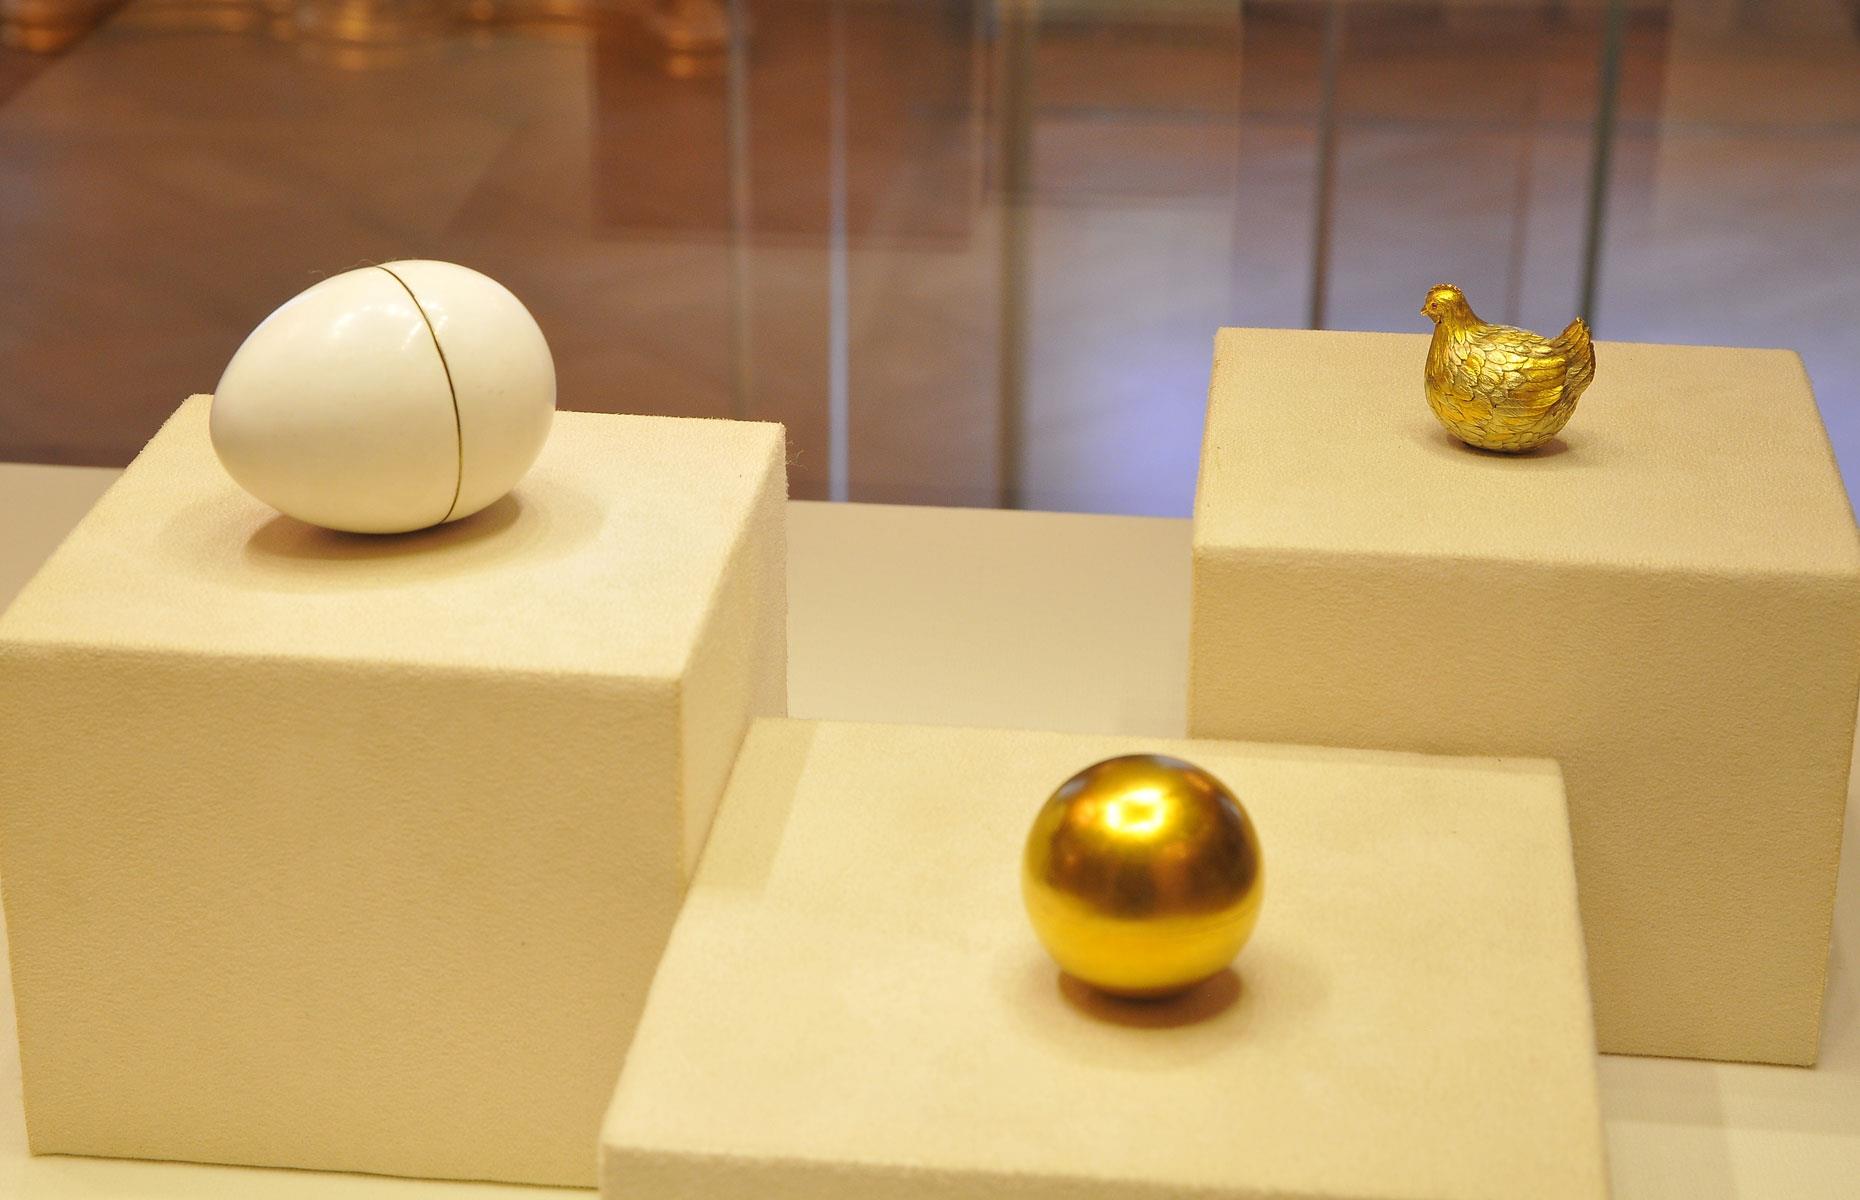 The first Fabergé egg